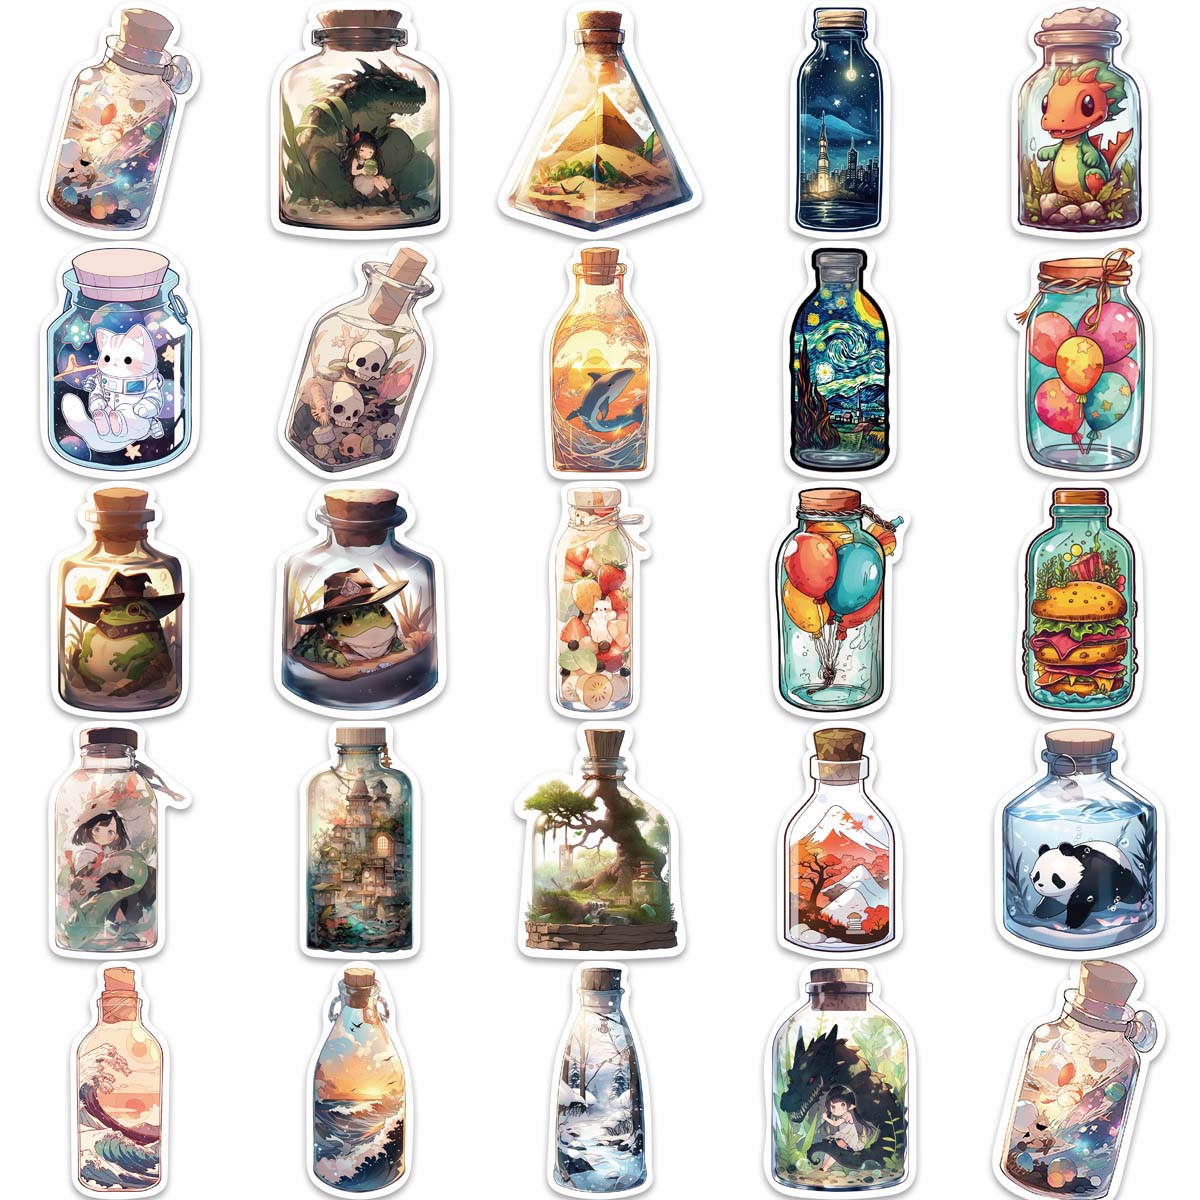 50pcs Bottle World 2 Stickers Decals